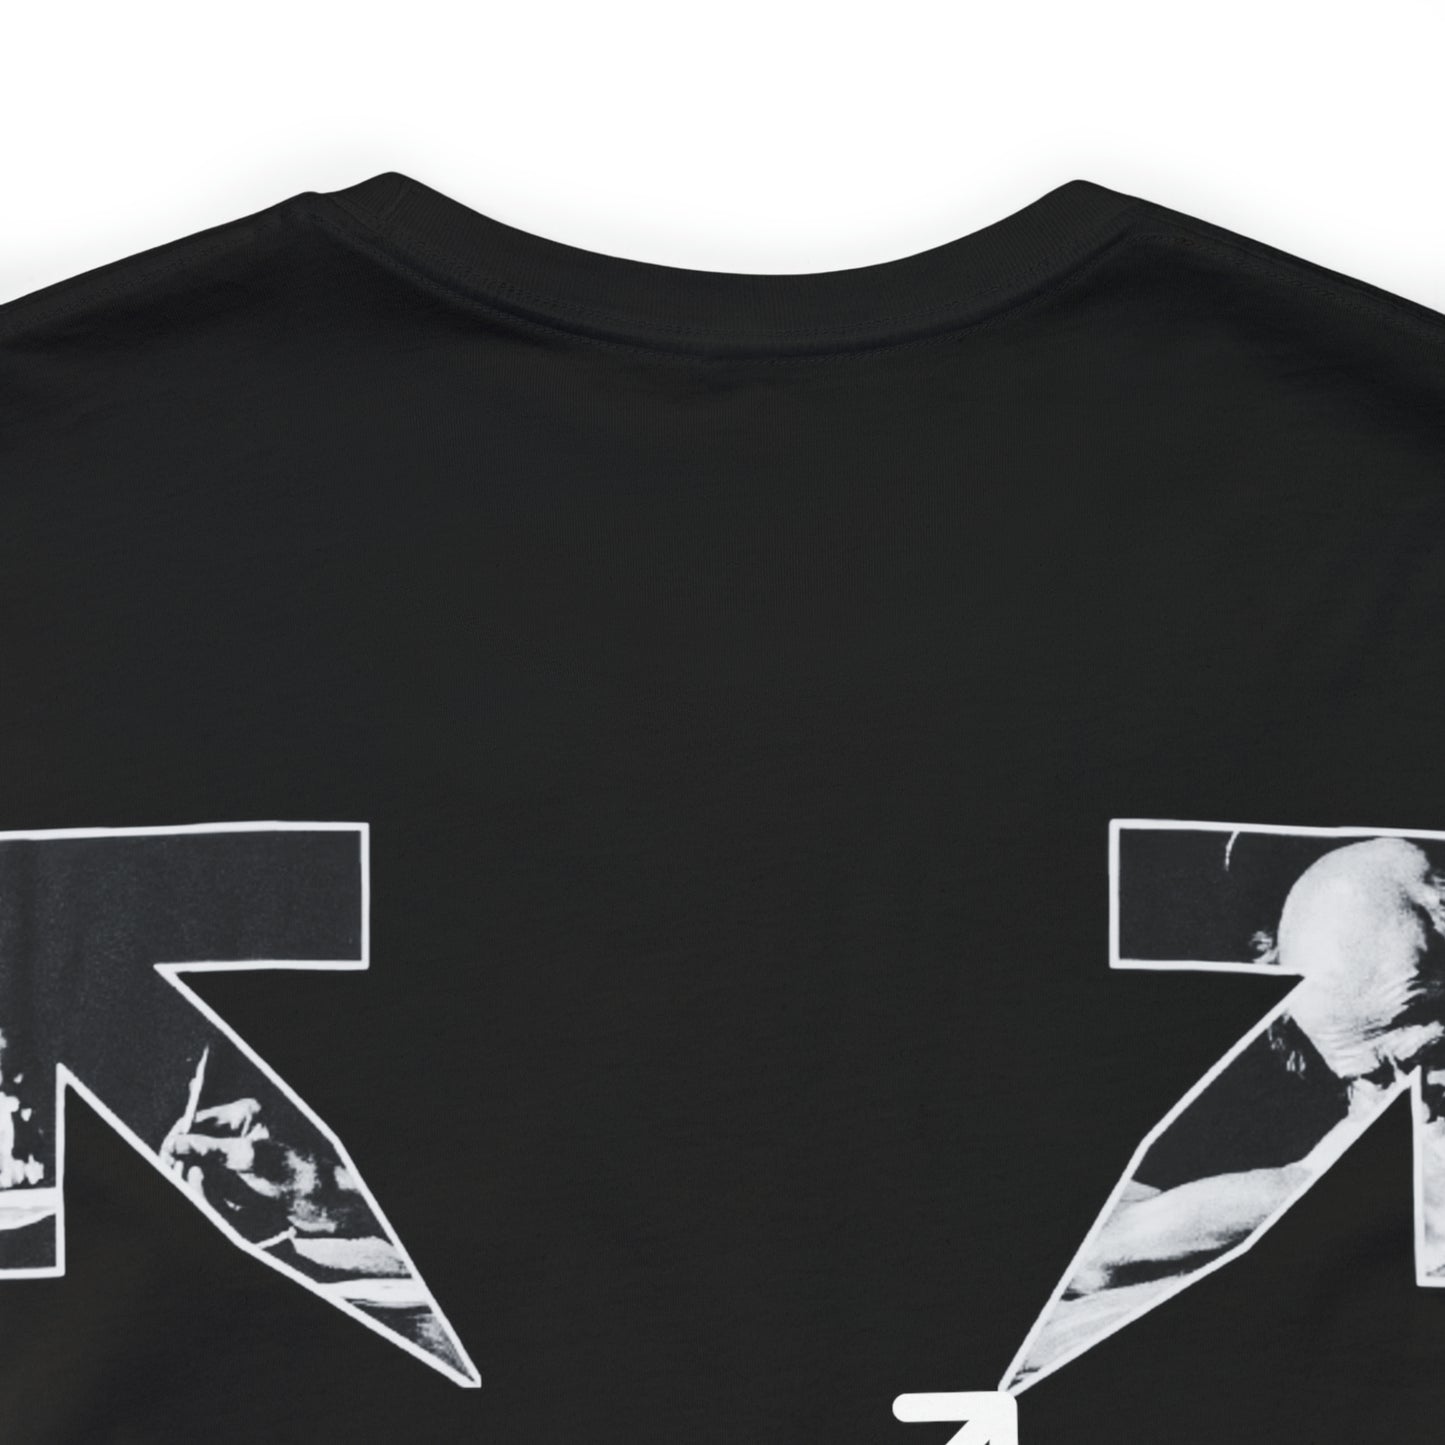 Caravaggio Arrows 69 on the back Men's T-shirt